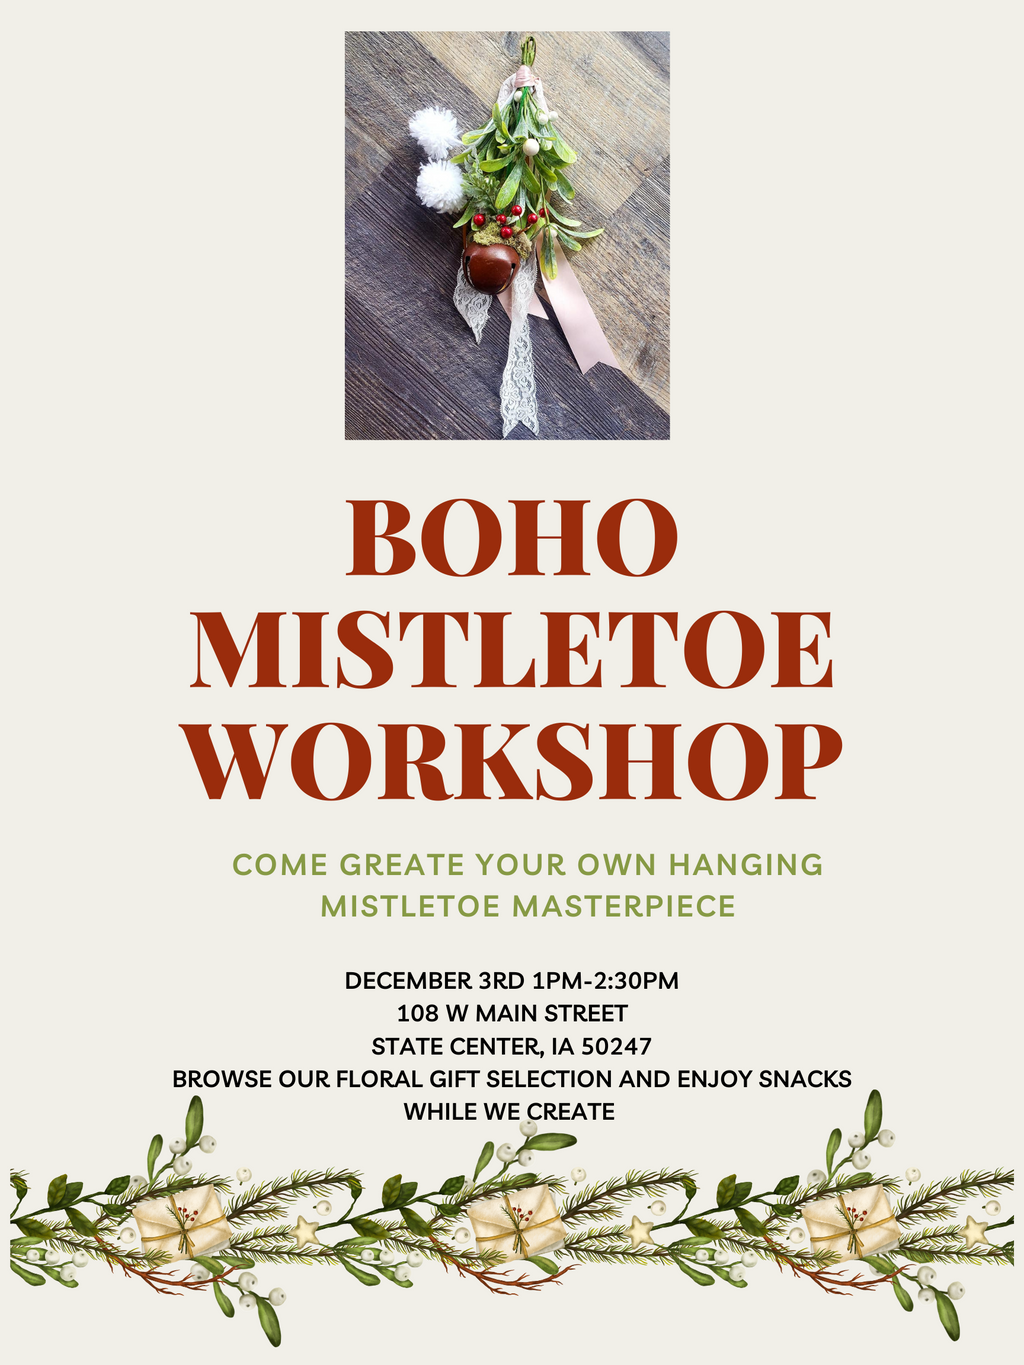 Boho Mistletoe Workshop